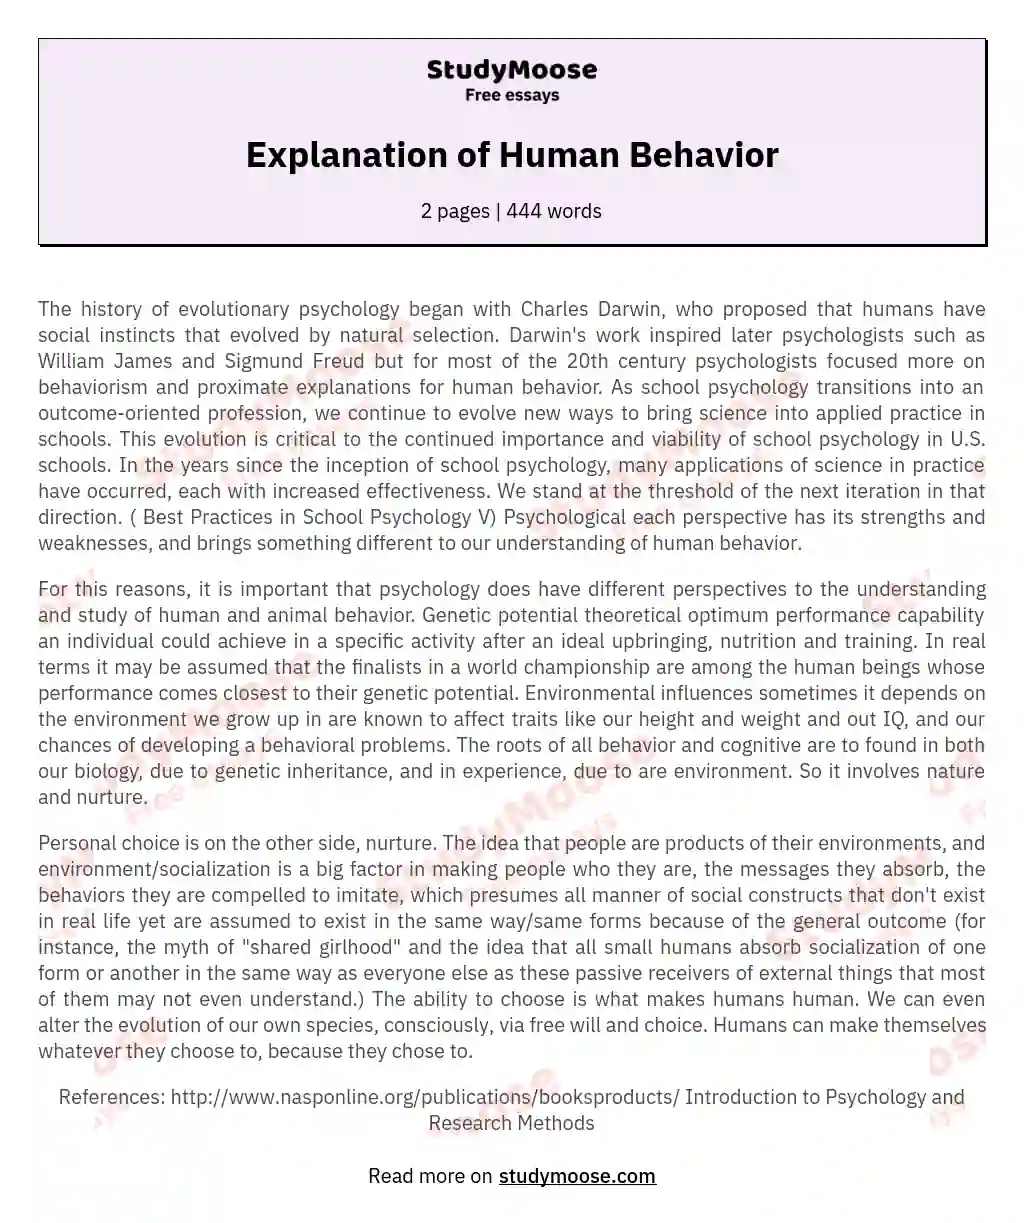 Explanation of Human Behavior